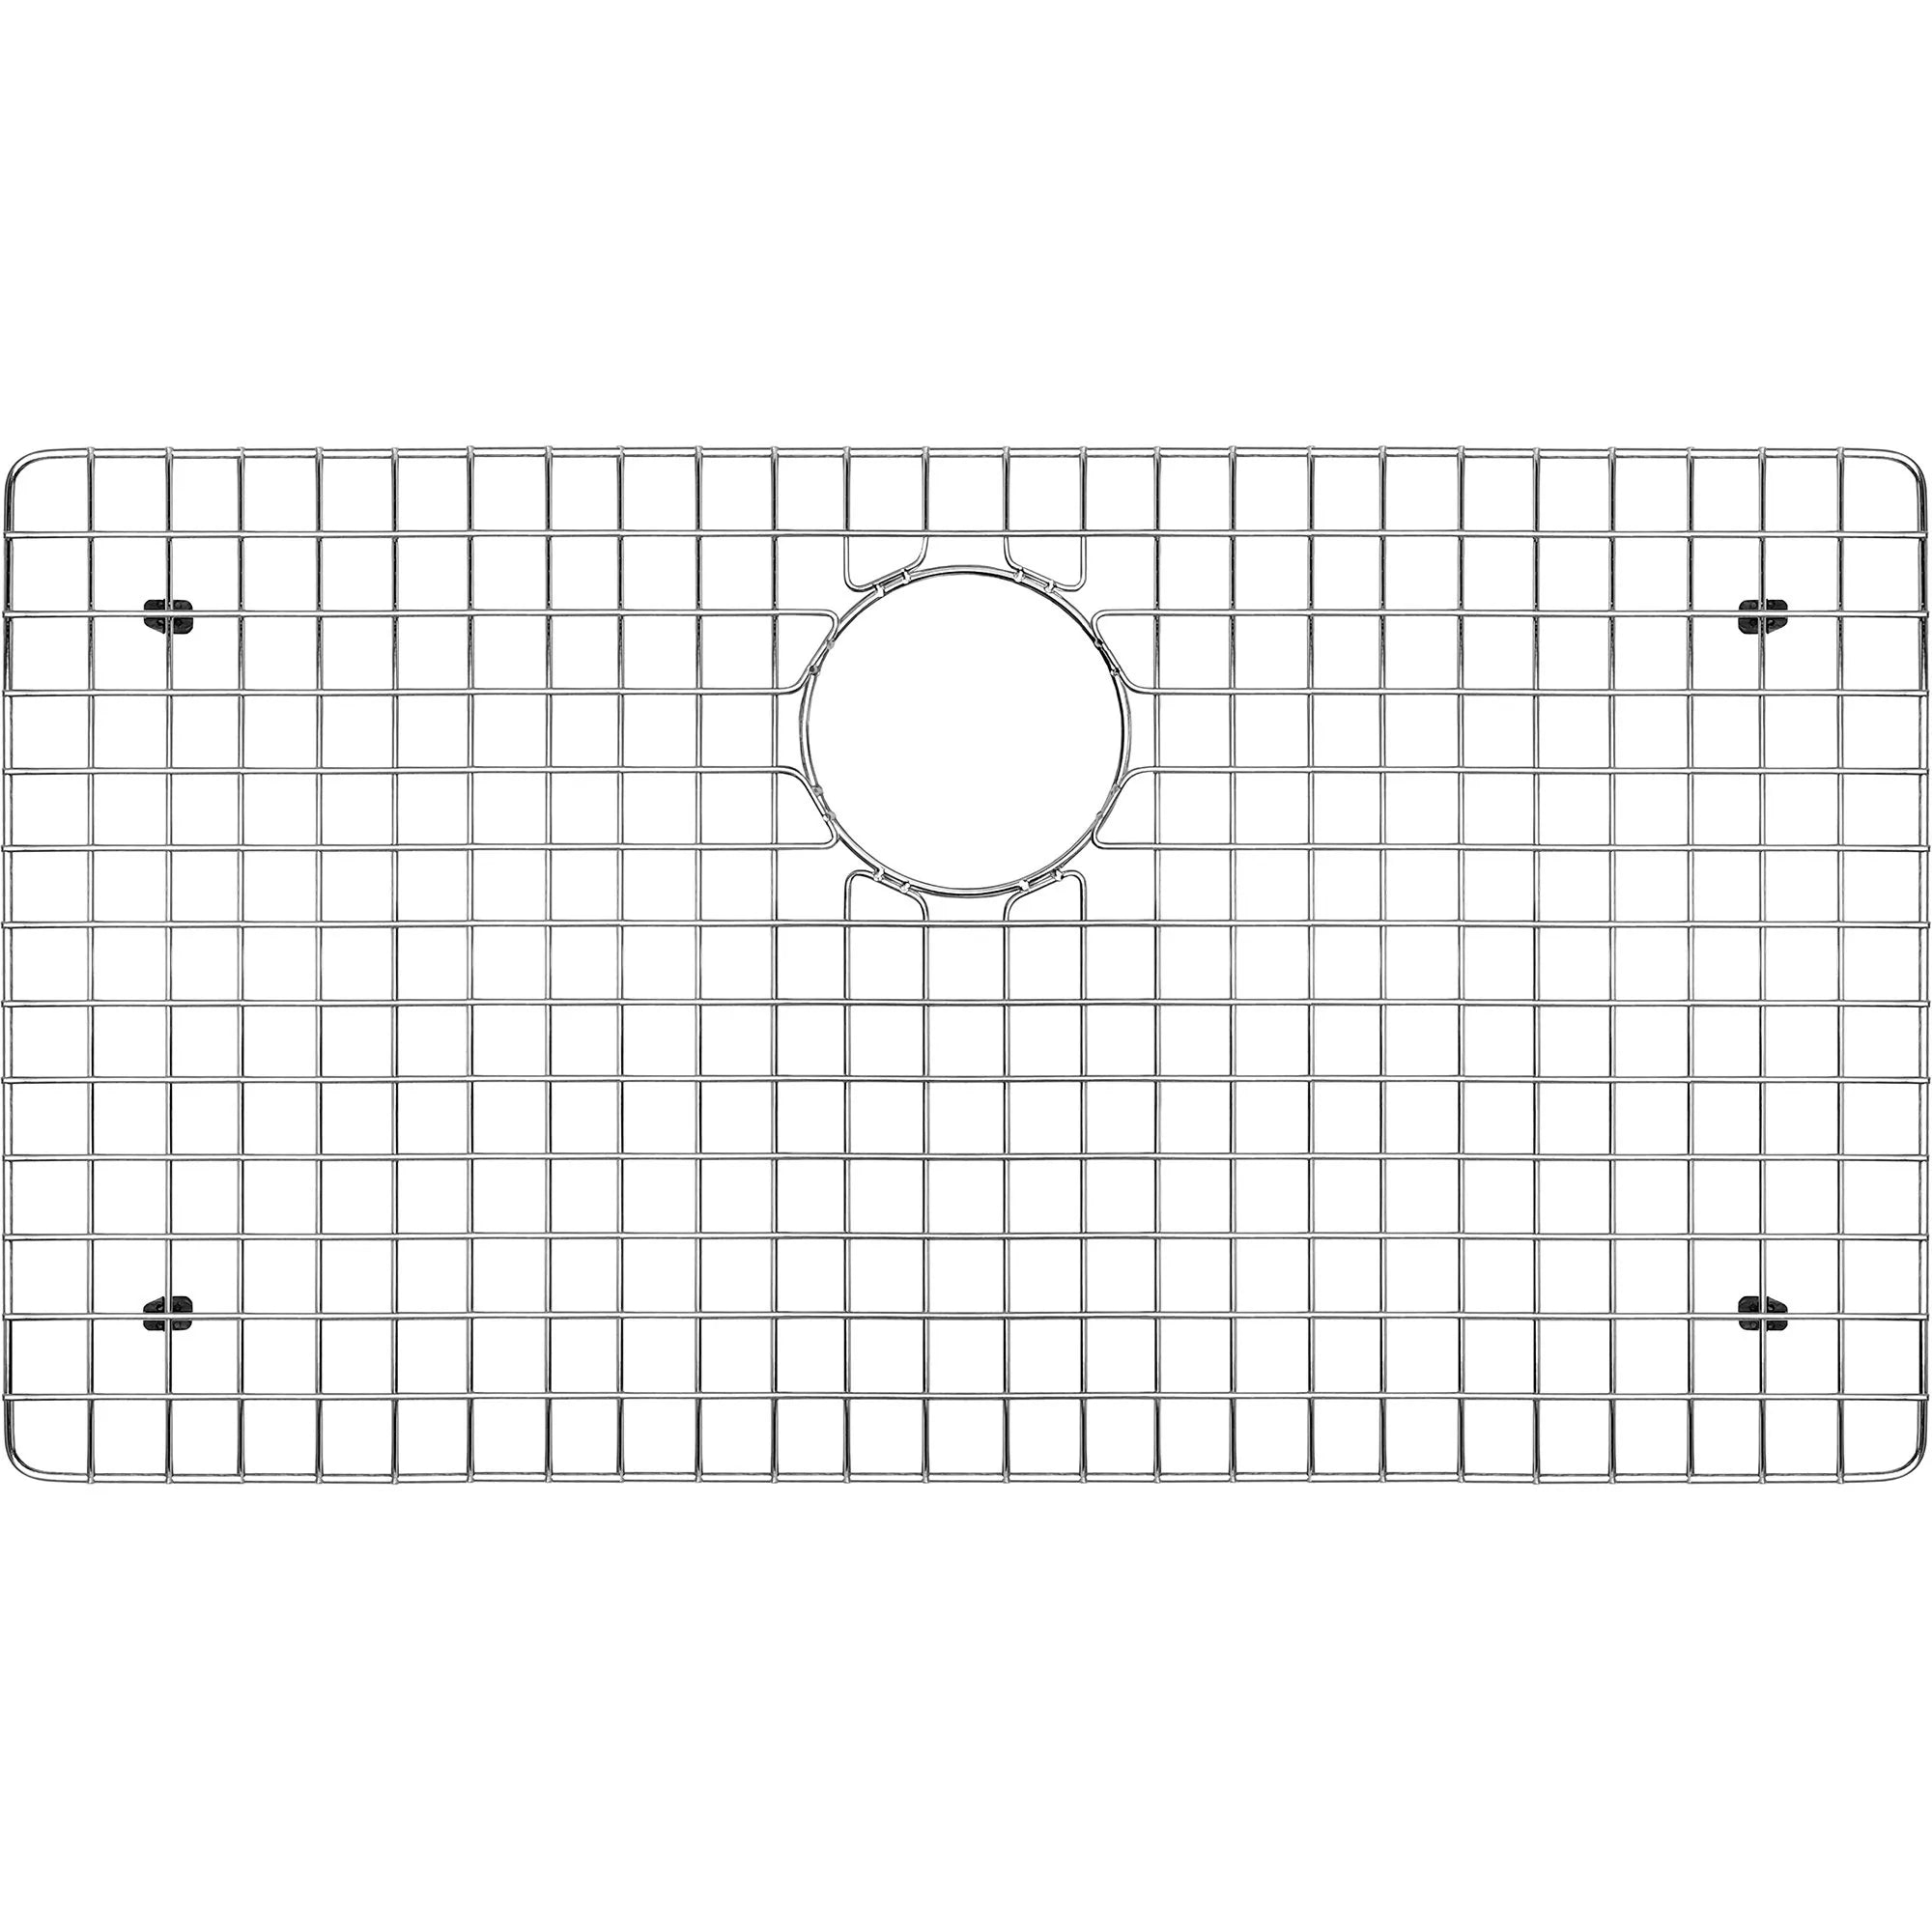 WHITEHAUS Stainless Steel Kitchen Sink Grid for Noah’s Sink Model WHNCMAP3021 - WHNCMAP3021G